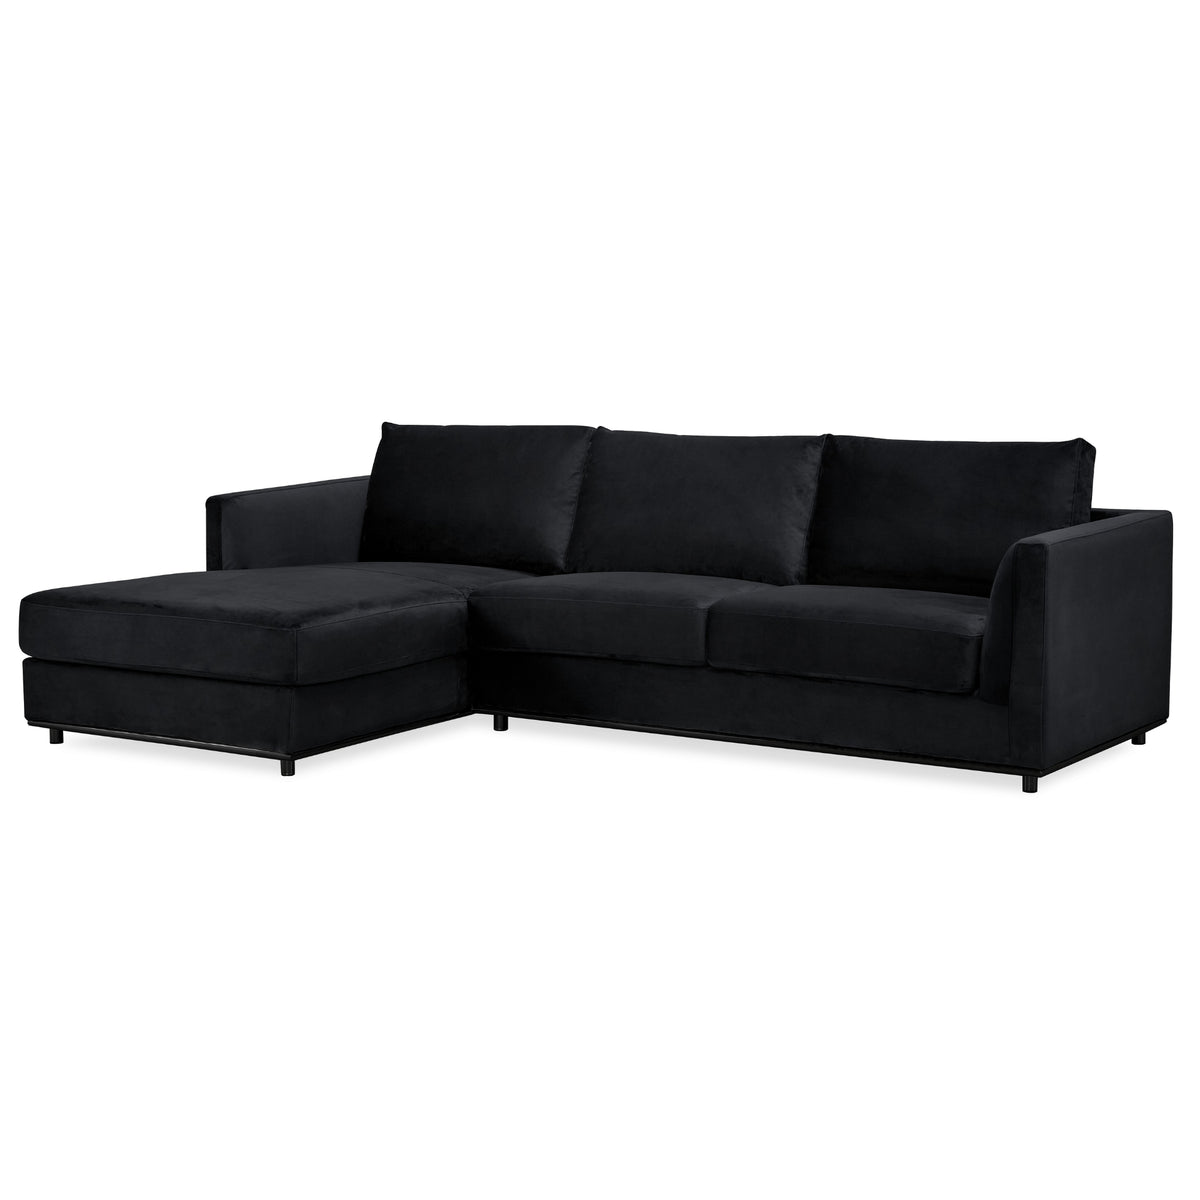 Kennedi 2 Seater Fabric Chaise Sofa Black Left